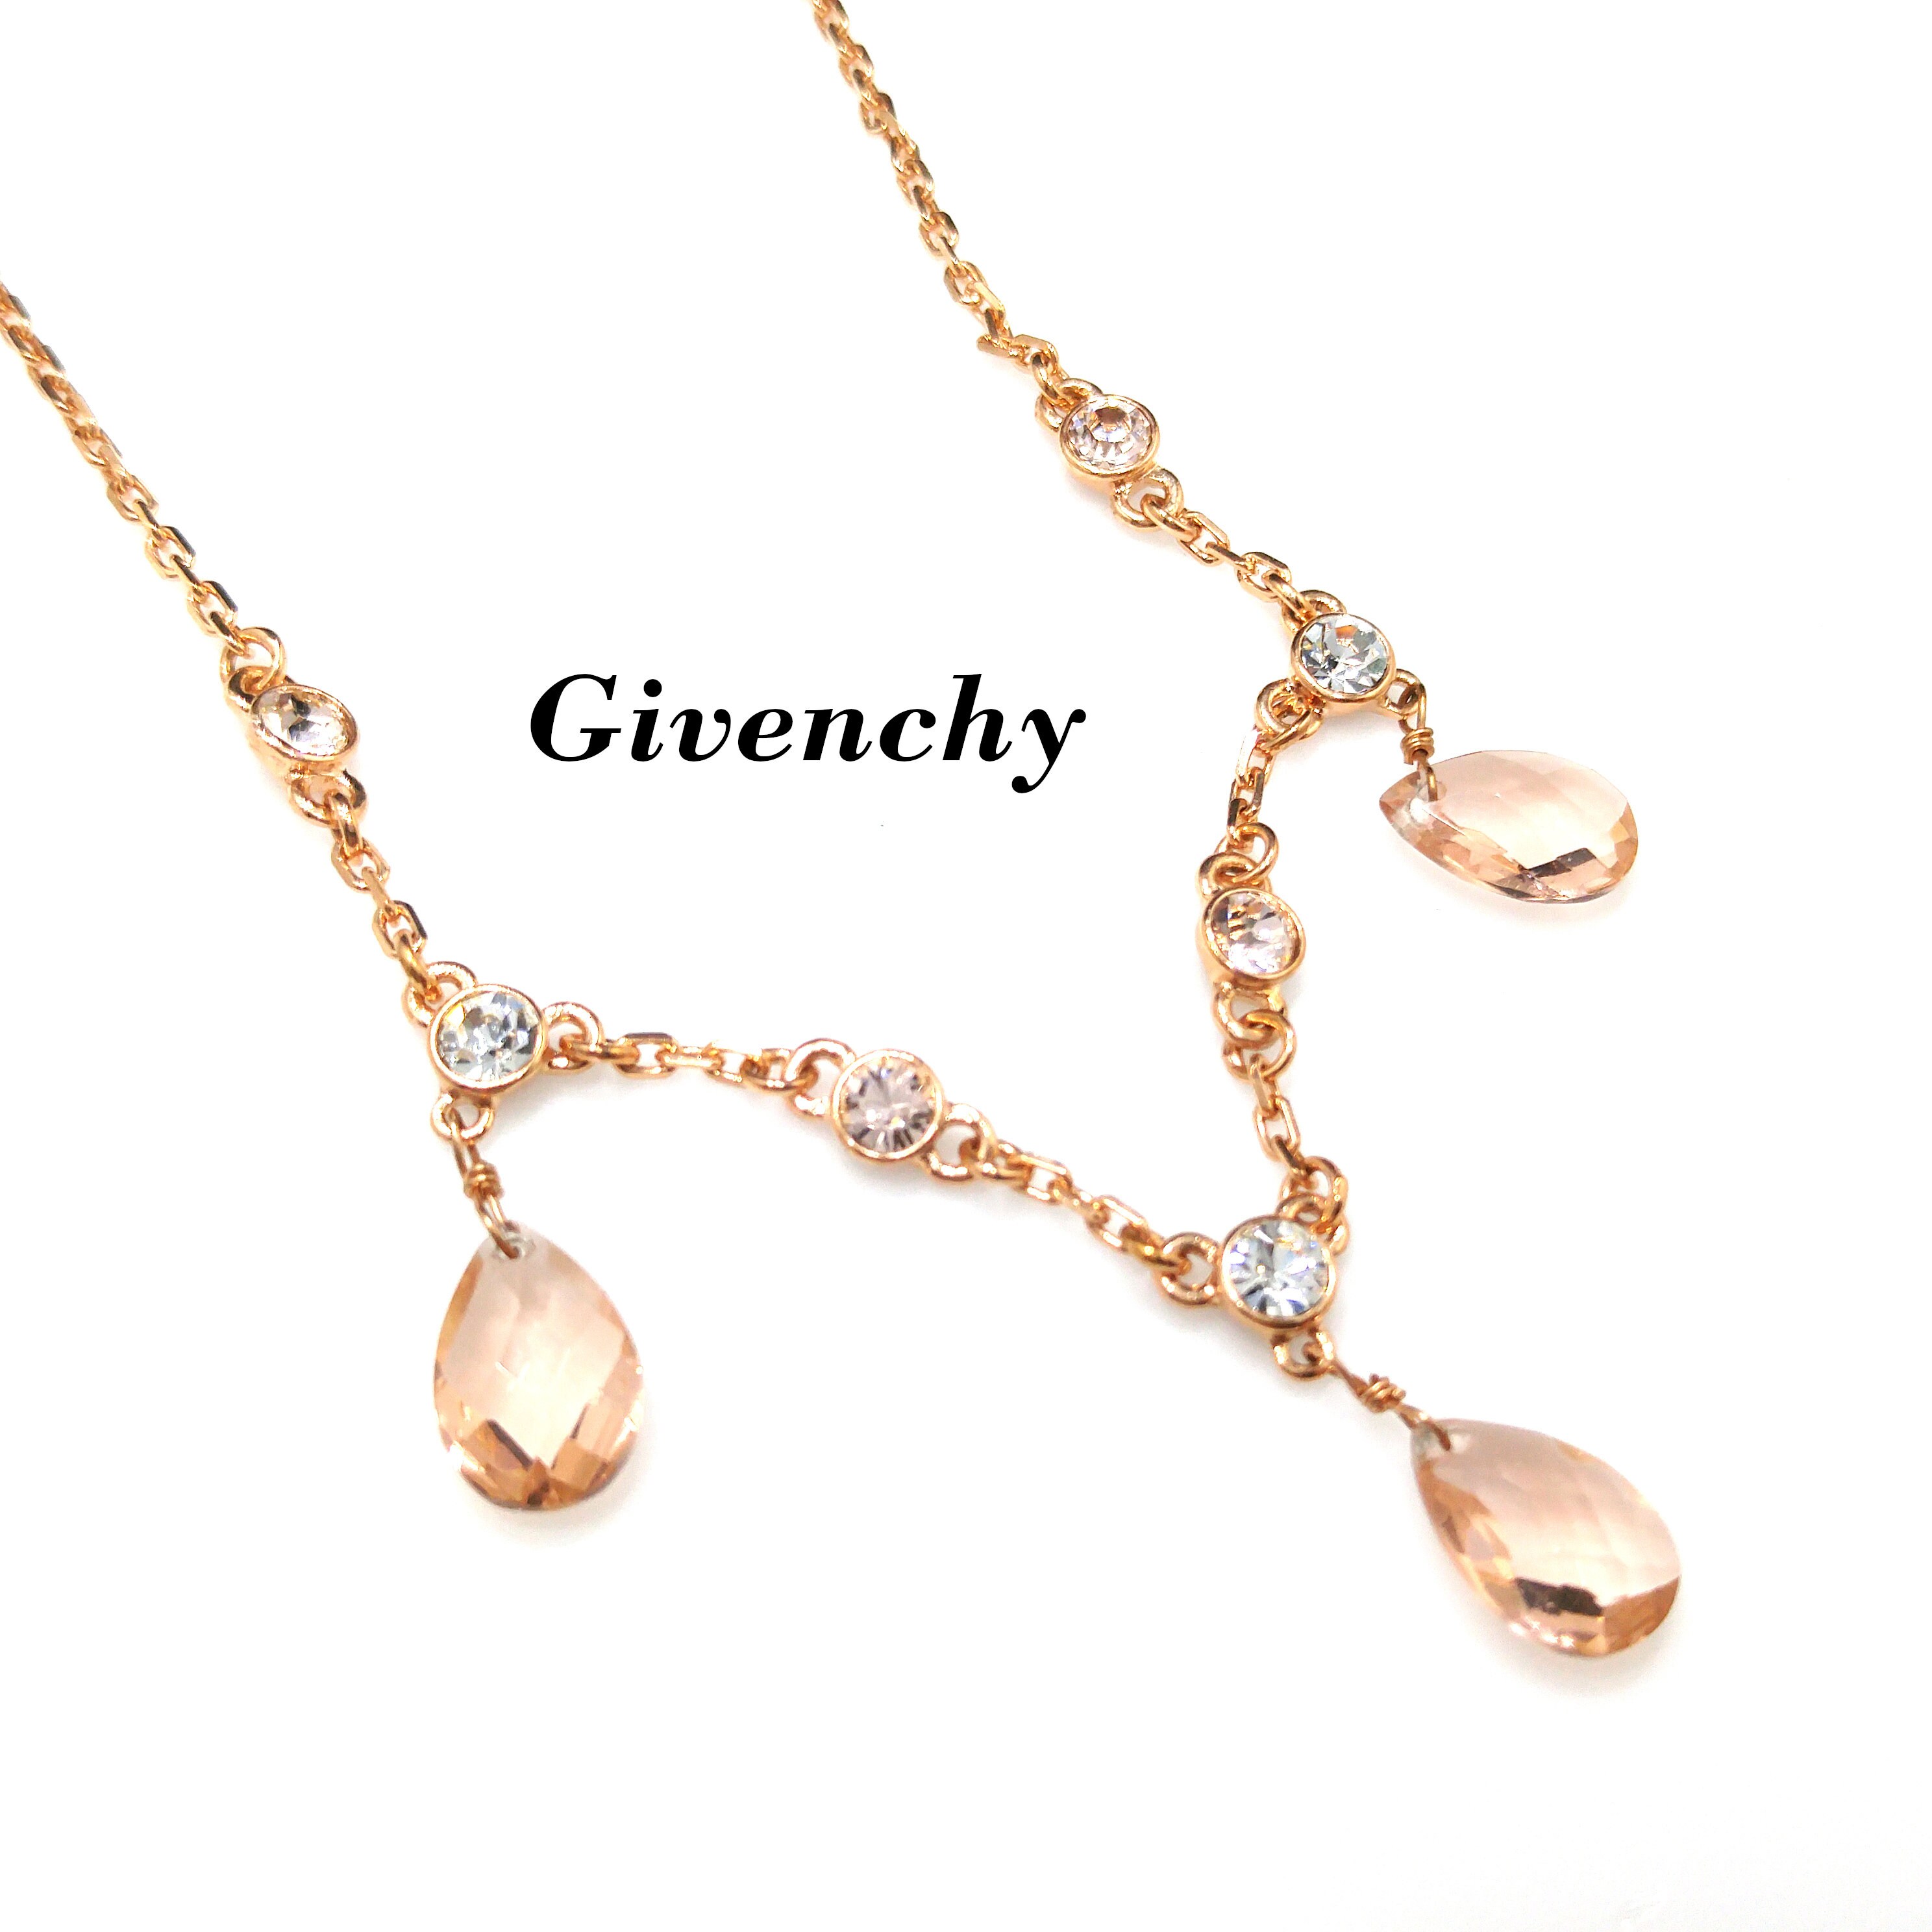 Givenchy Gold-Tone Vintage Rose Crystal Statement Necklace, 16